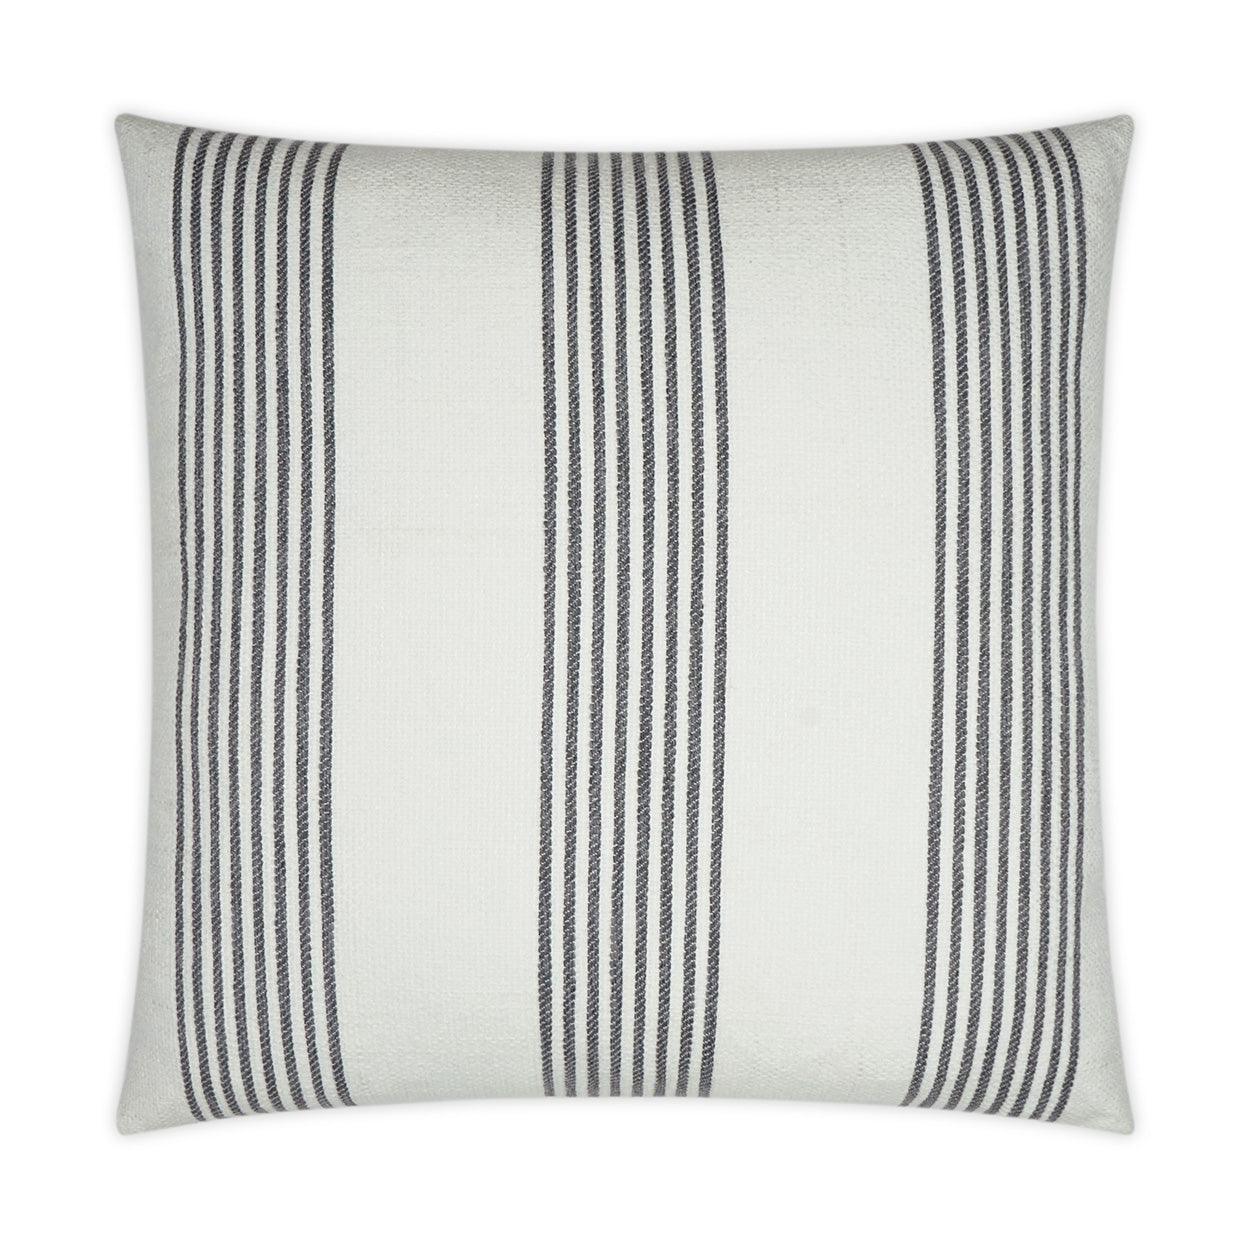 Newport Domino Stripes Nautical White Grey Large Throw Pillow With Insert - Uptown Sebastian